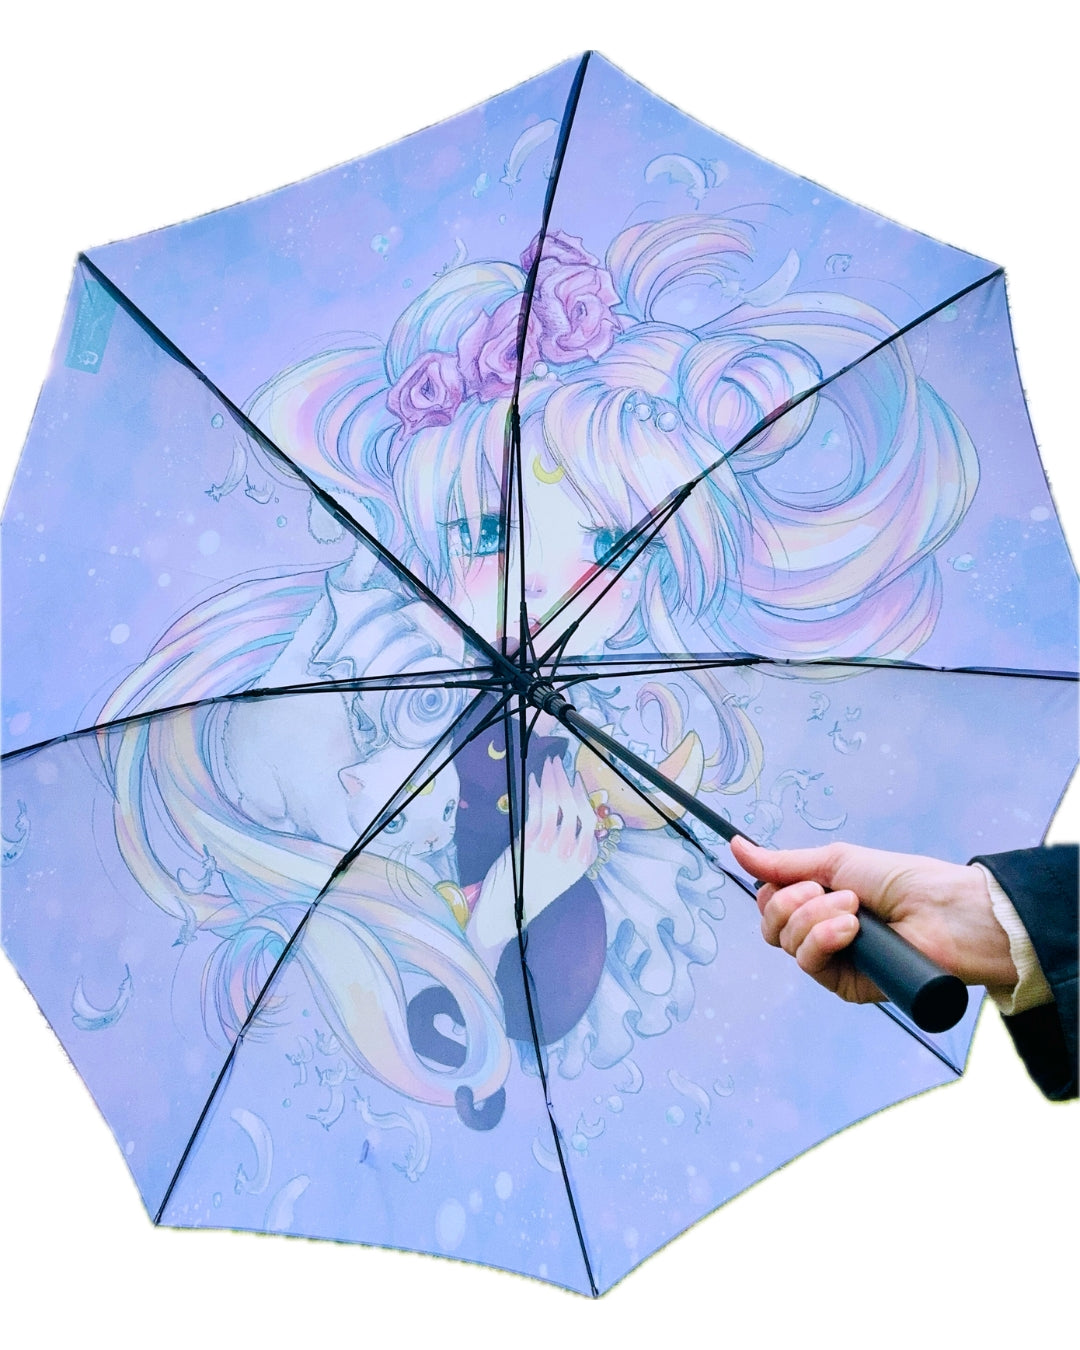 Moonflower Umbrella